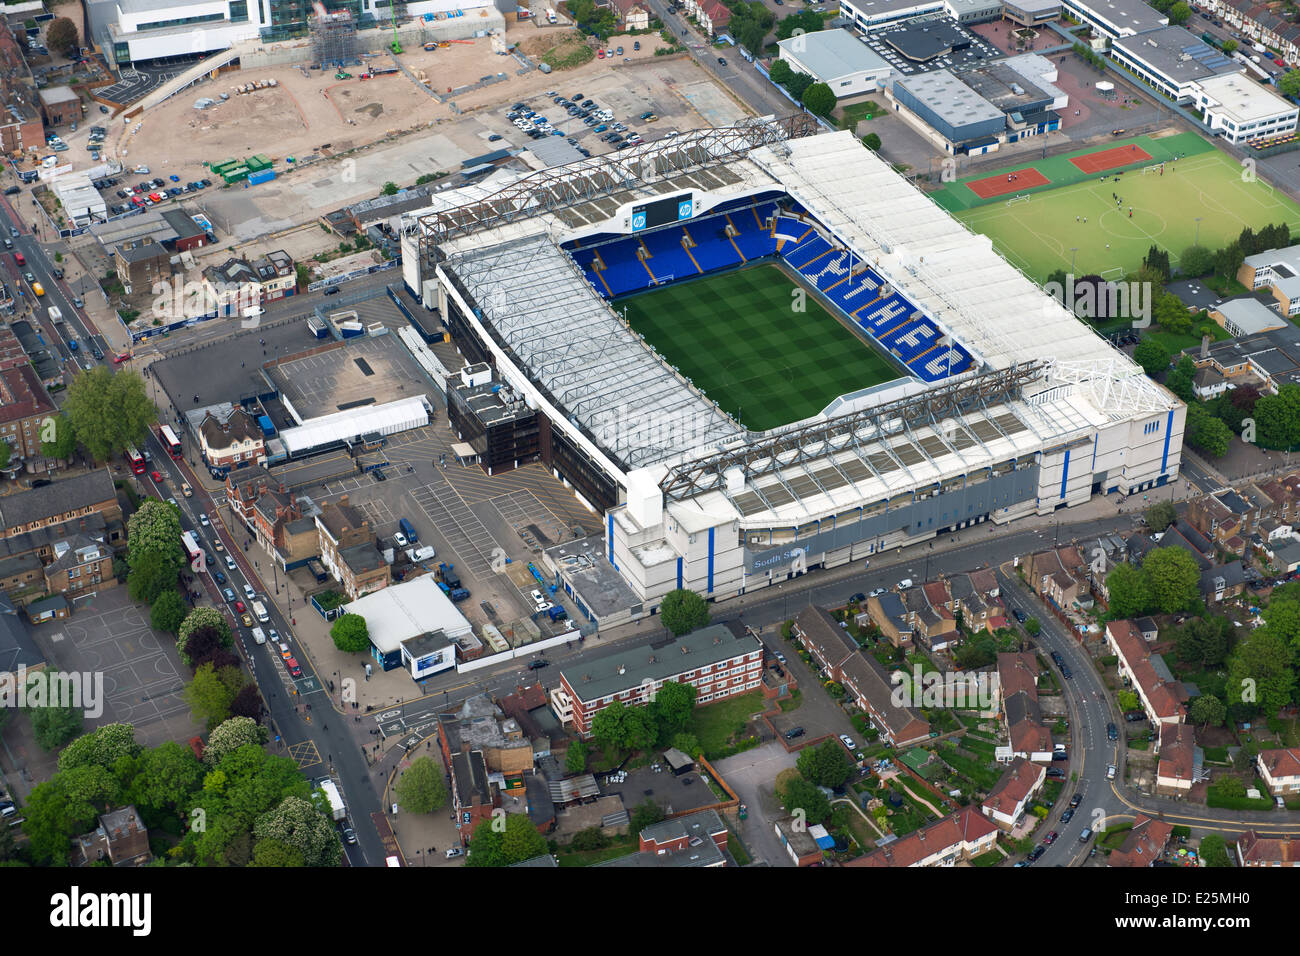 Tottenham Hotspur Football Club Stade de White Hart Lane de Londres. Banque D'Images